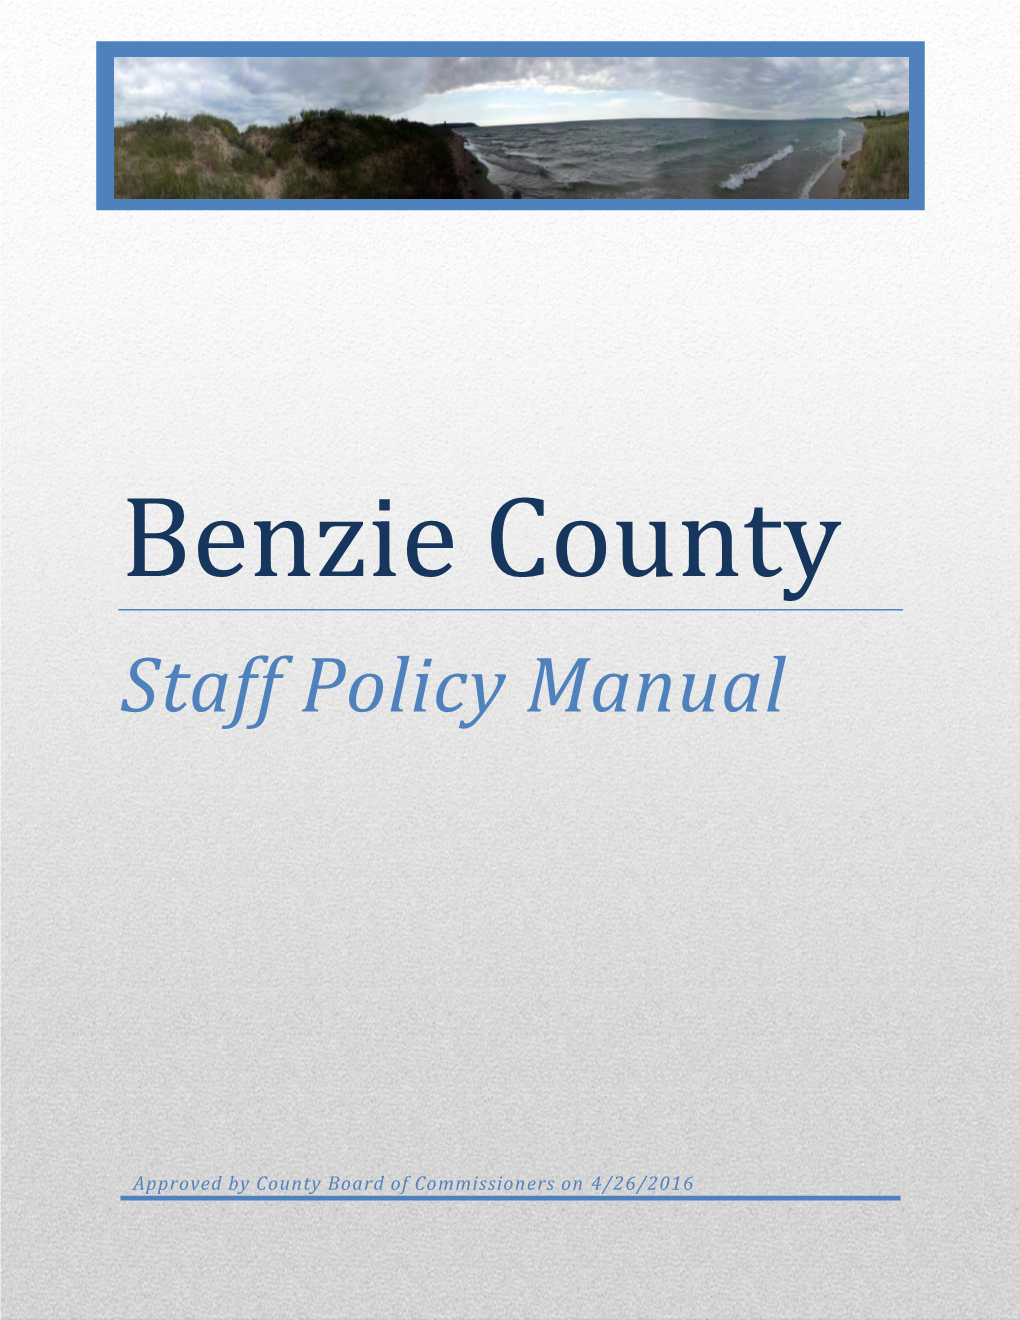 Staff Policy Manual